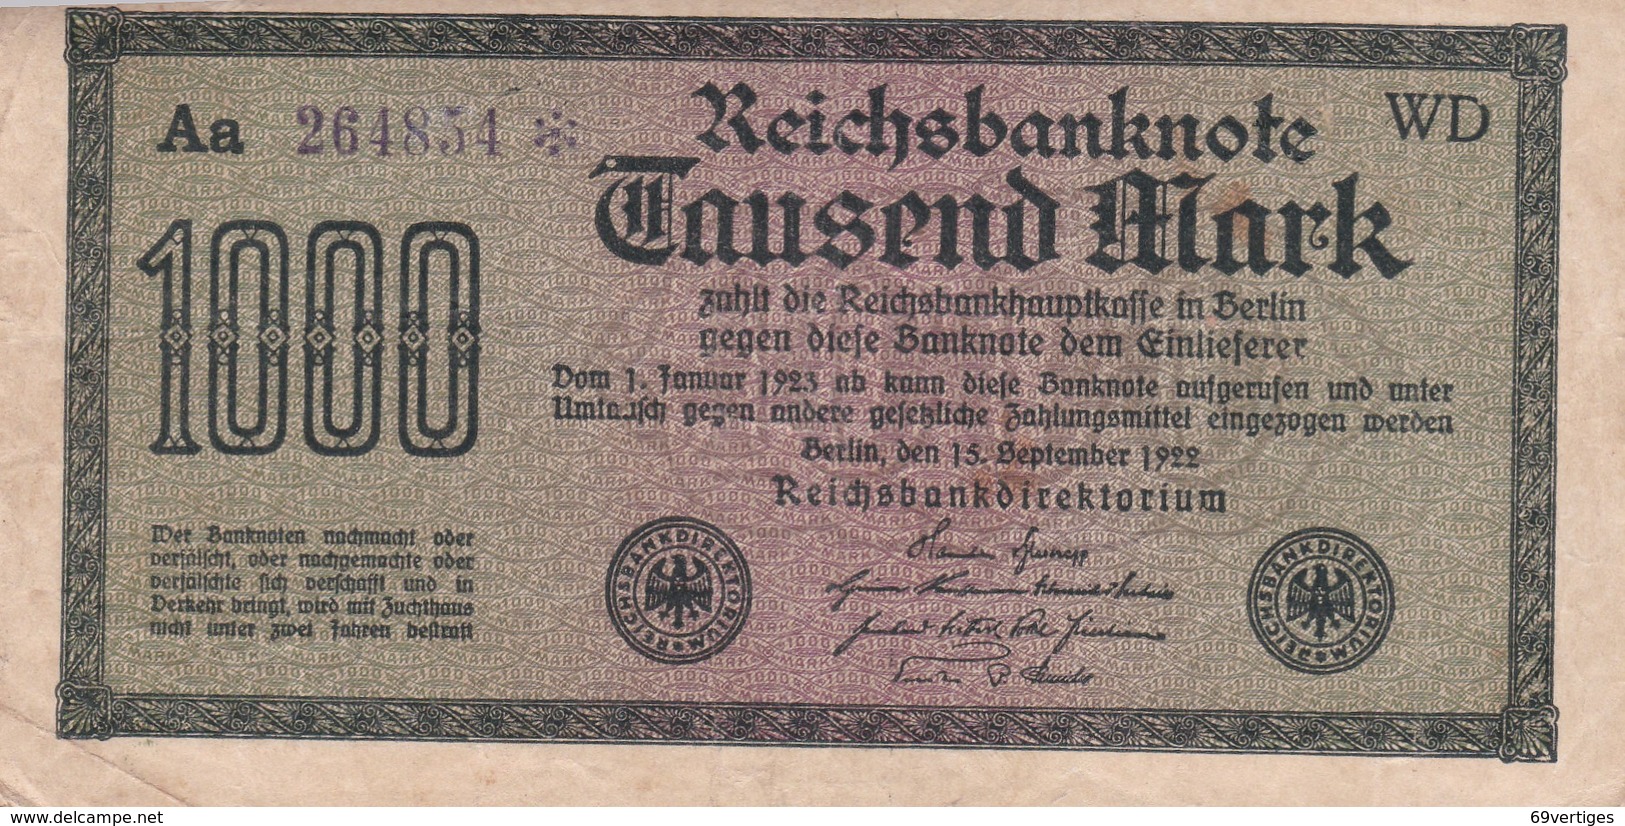 1000 MARK, Berlin 1922, Aa 264834 * WD, Série Etoile - 1000 Mark